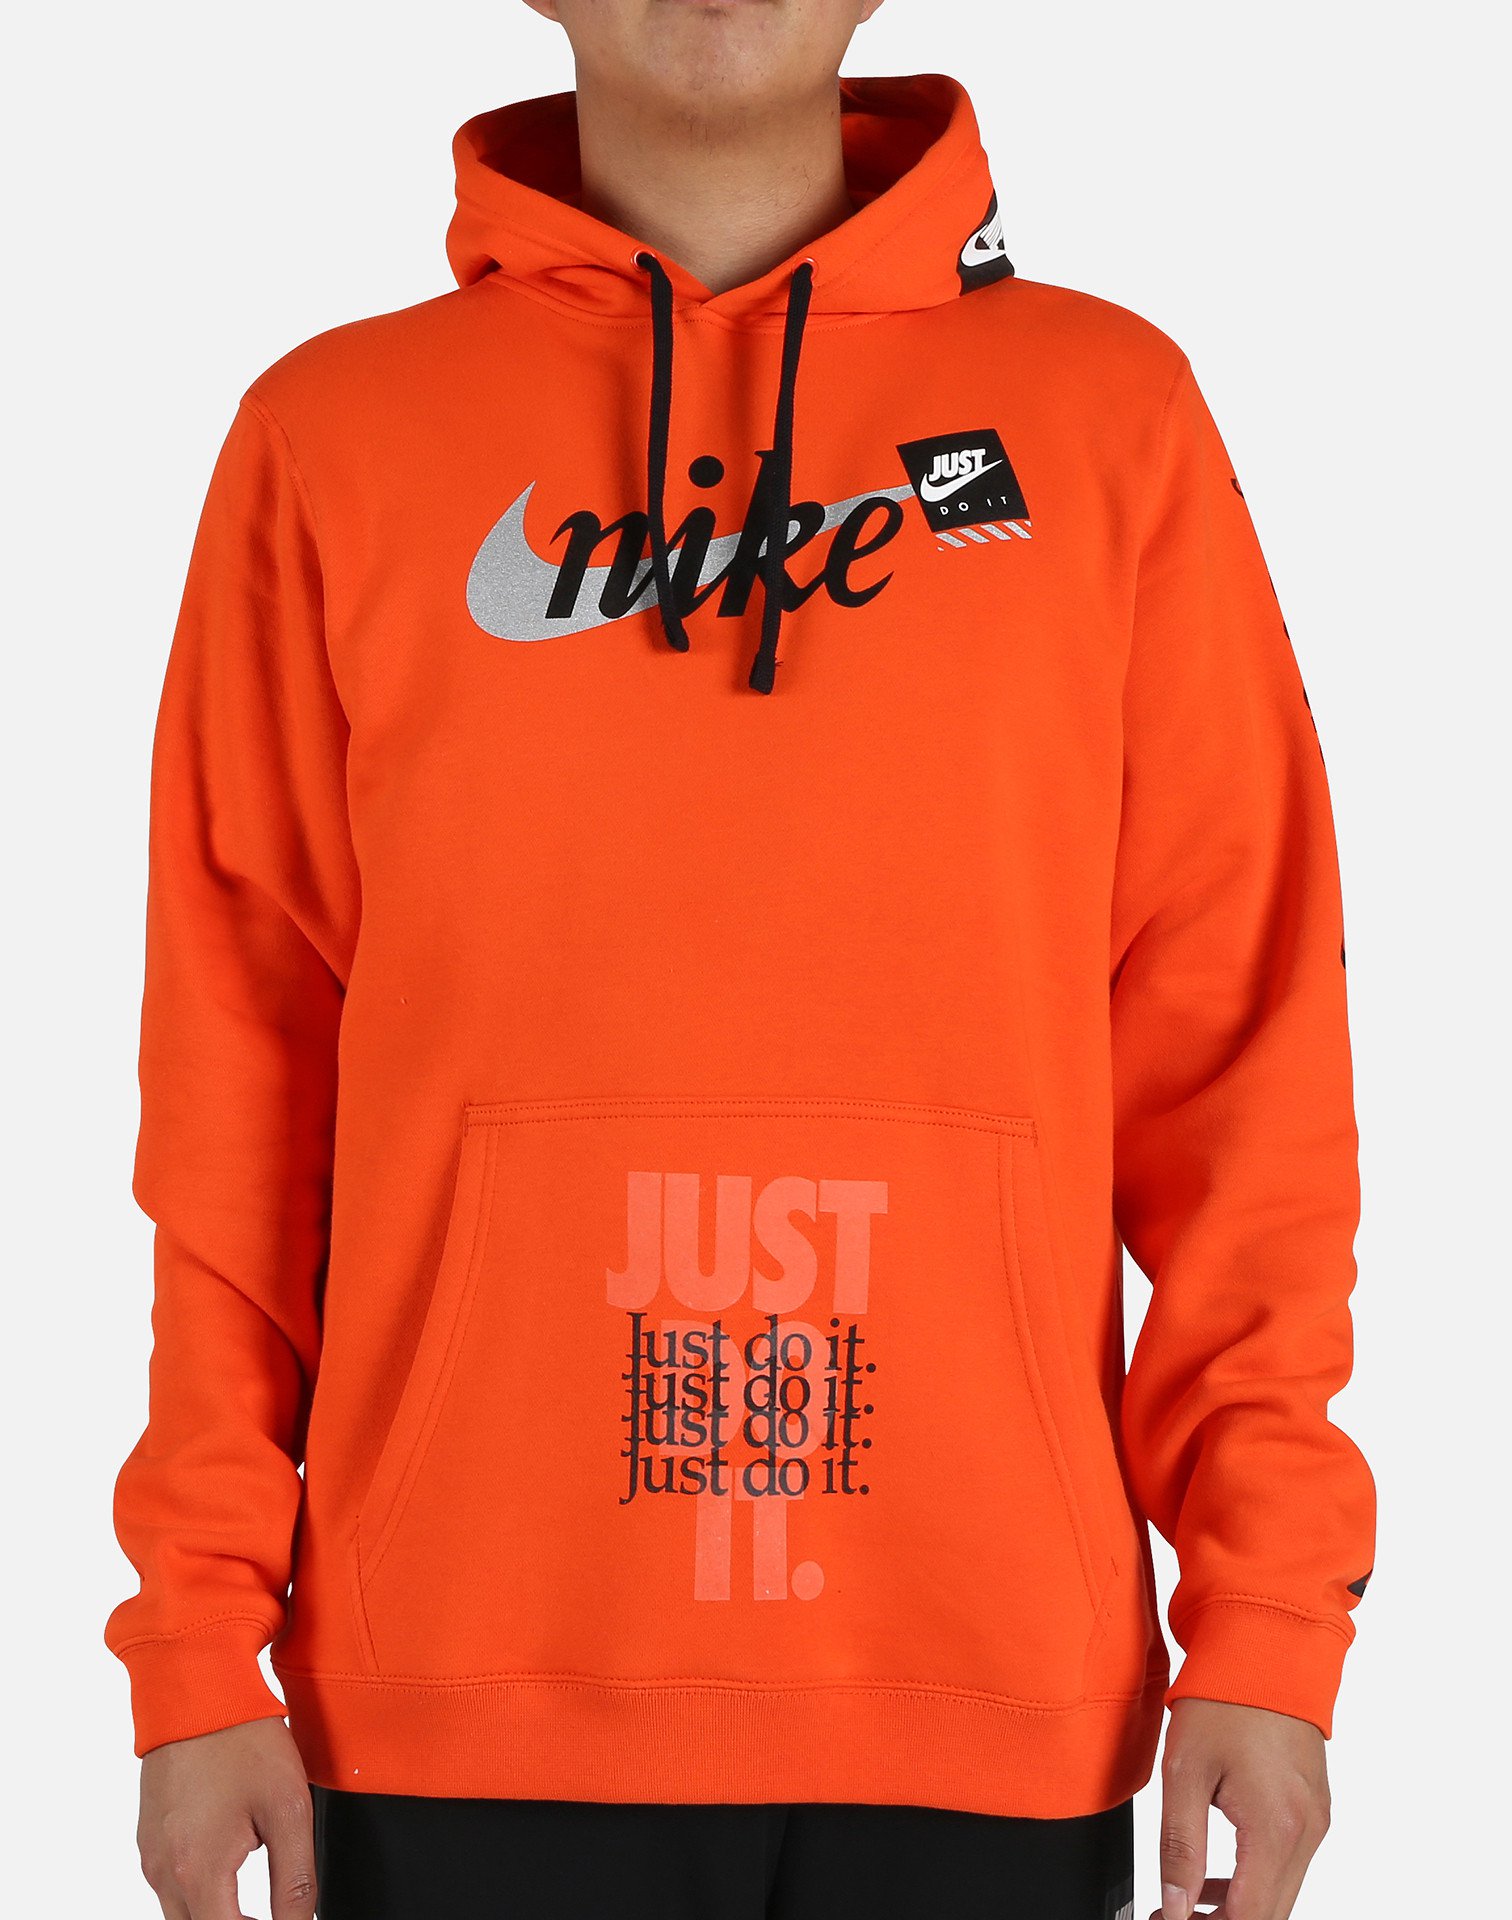 nike hoodie with orange logo